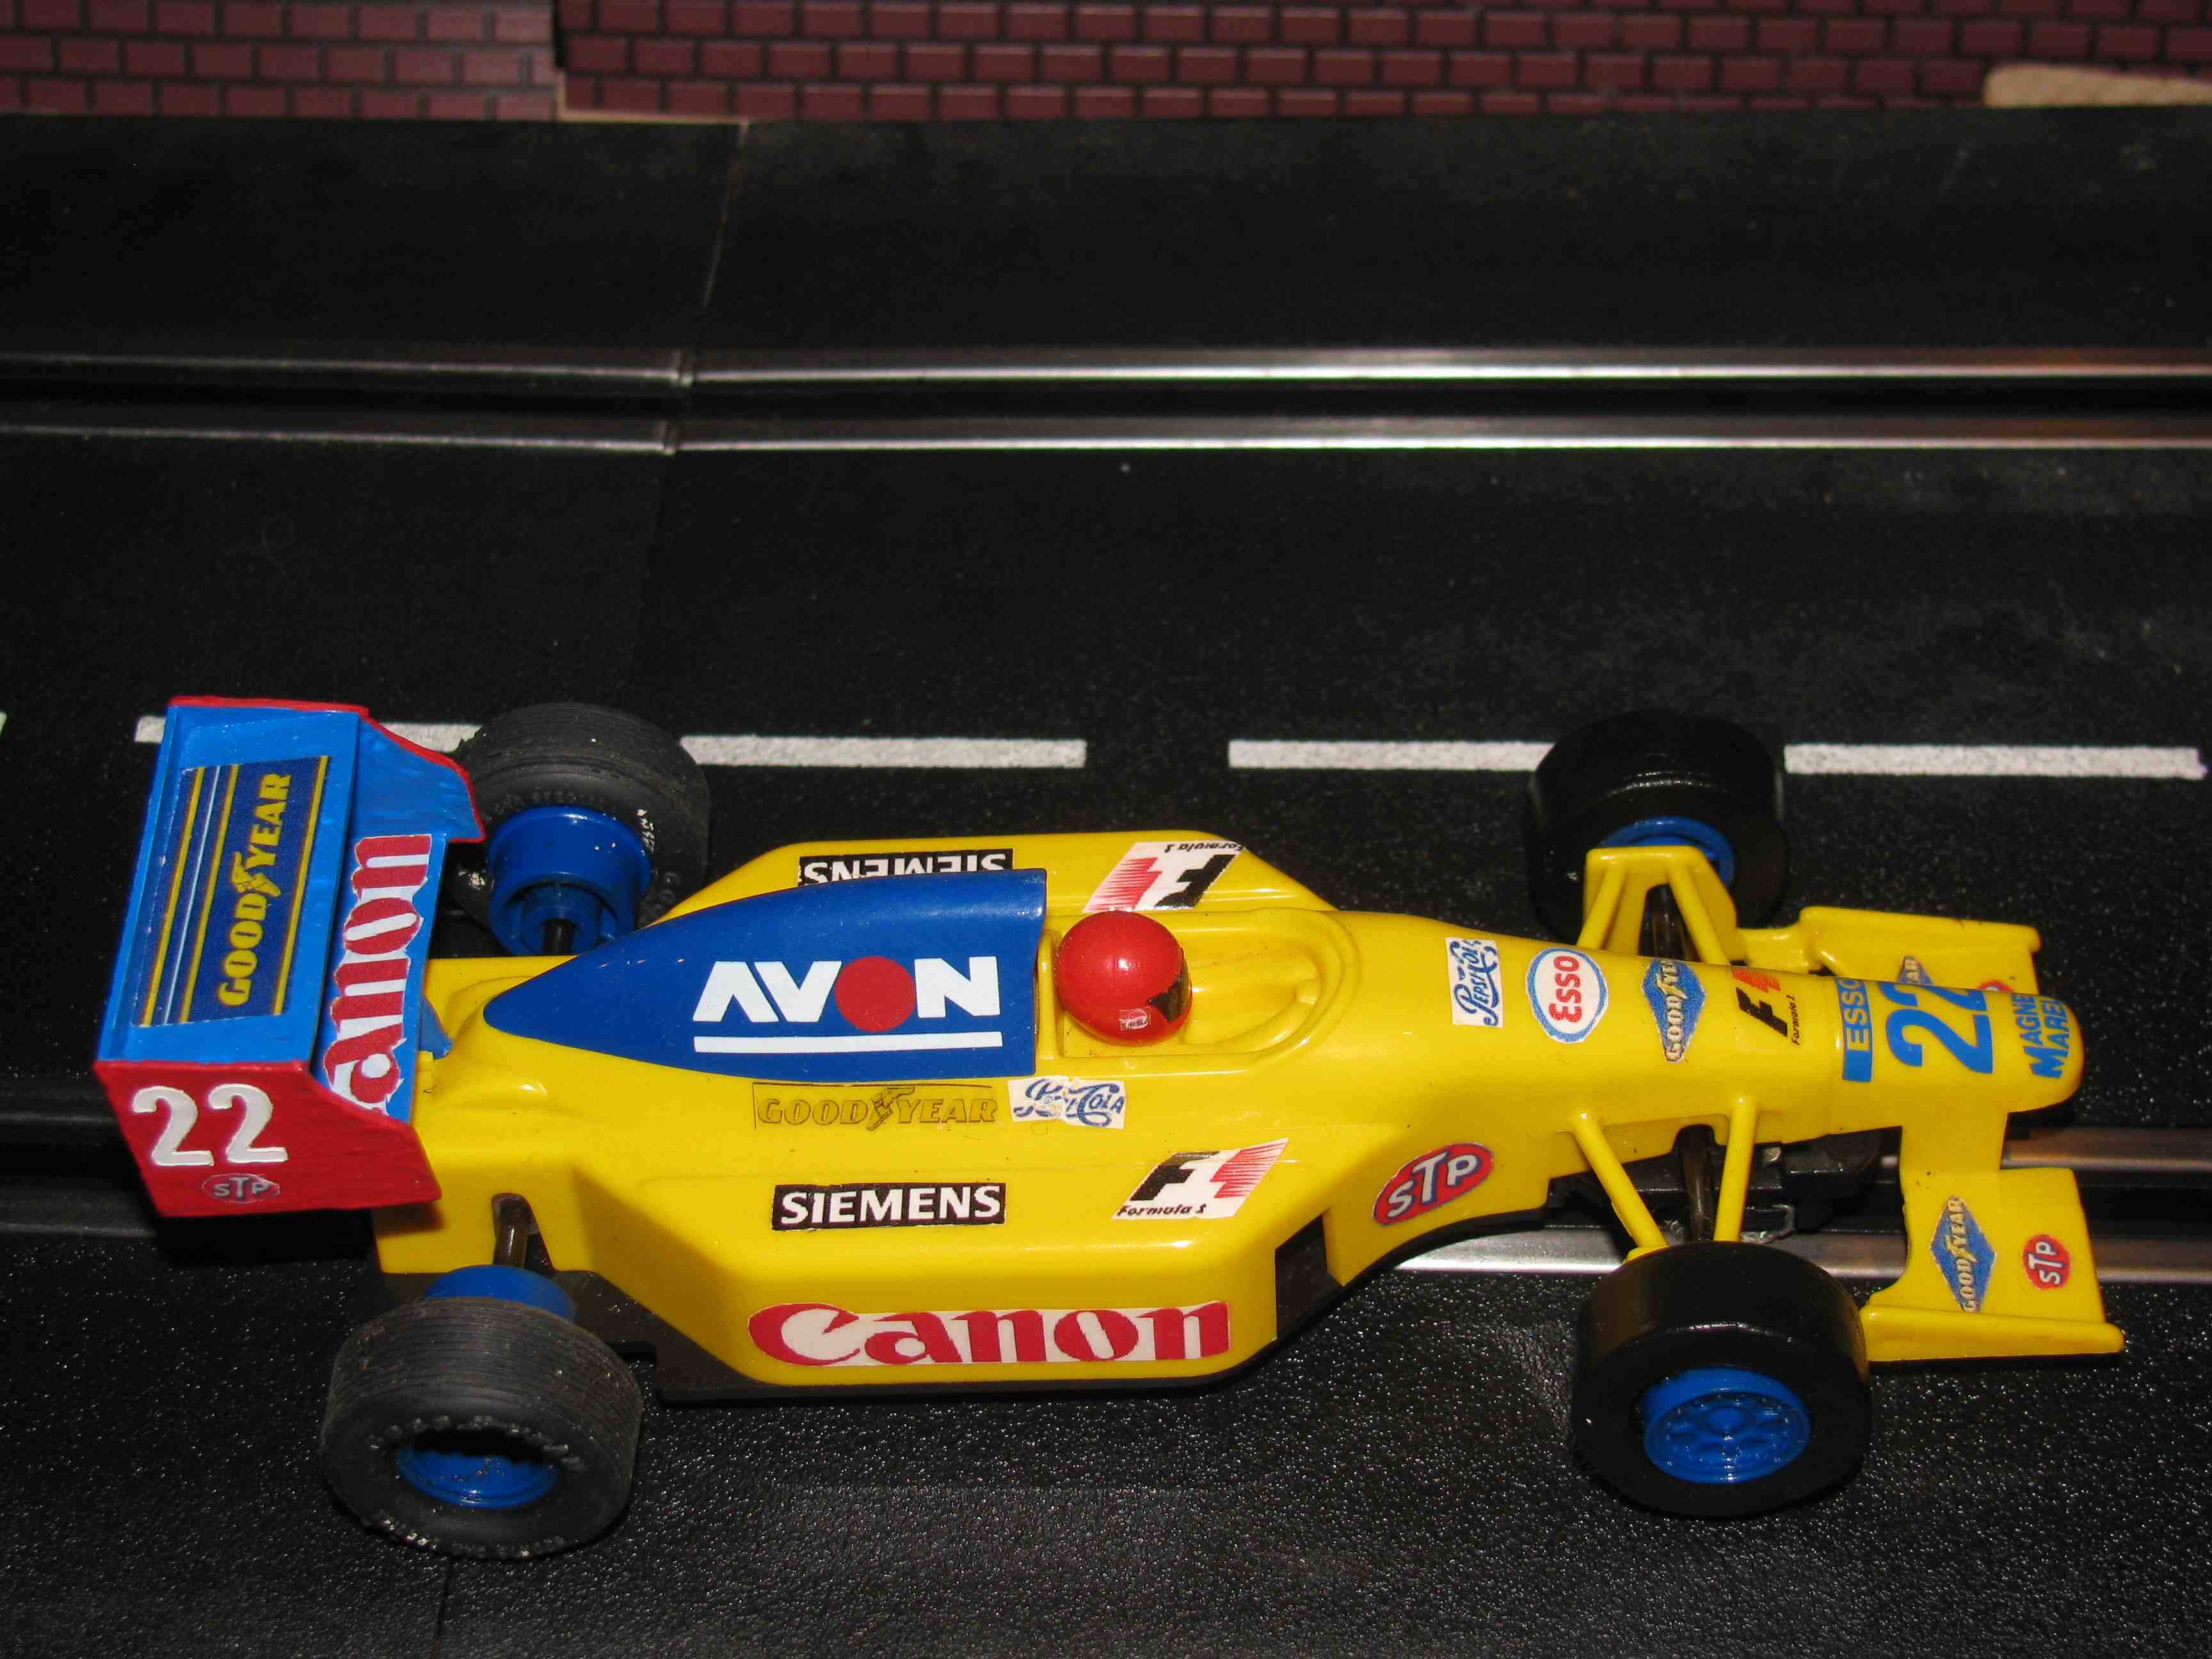 Hornby Formula 1 Slot Car 1/32 Scale – Car 22